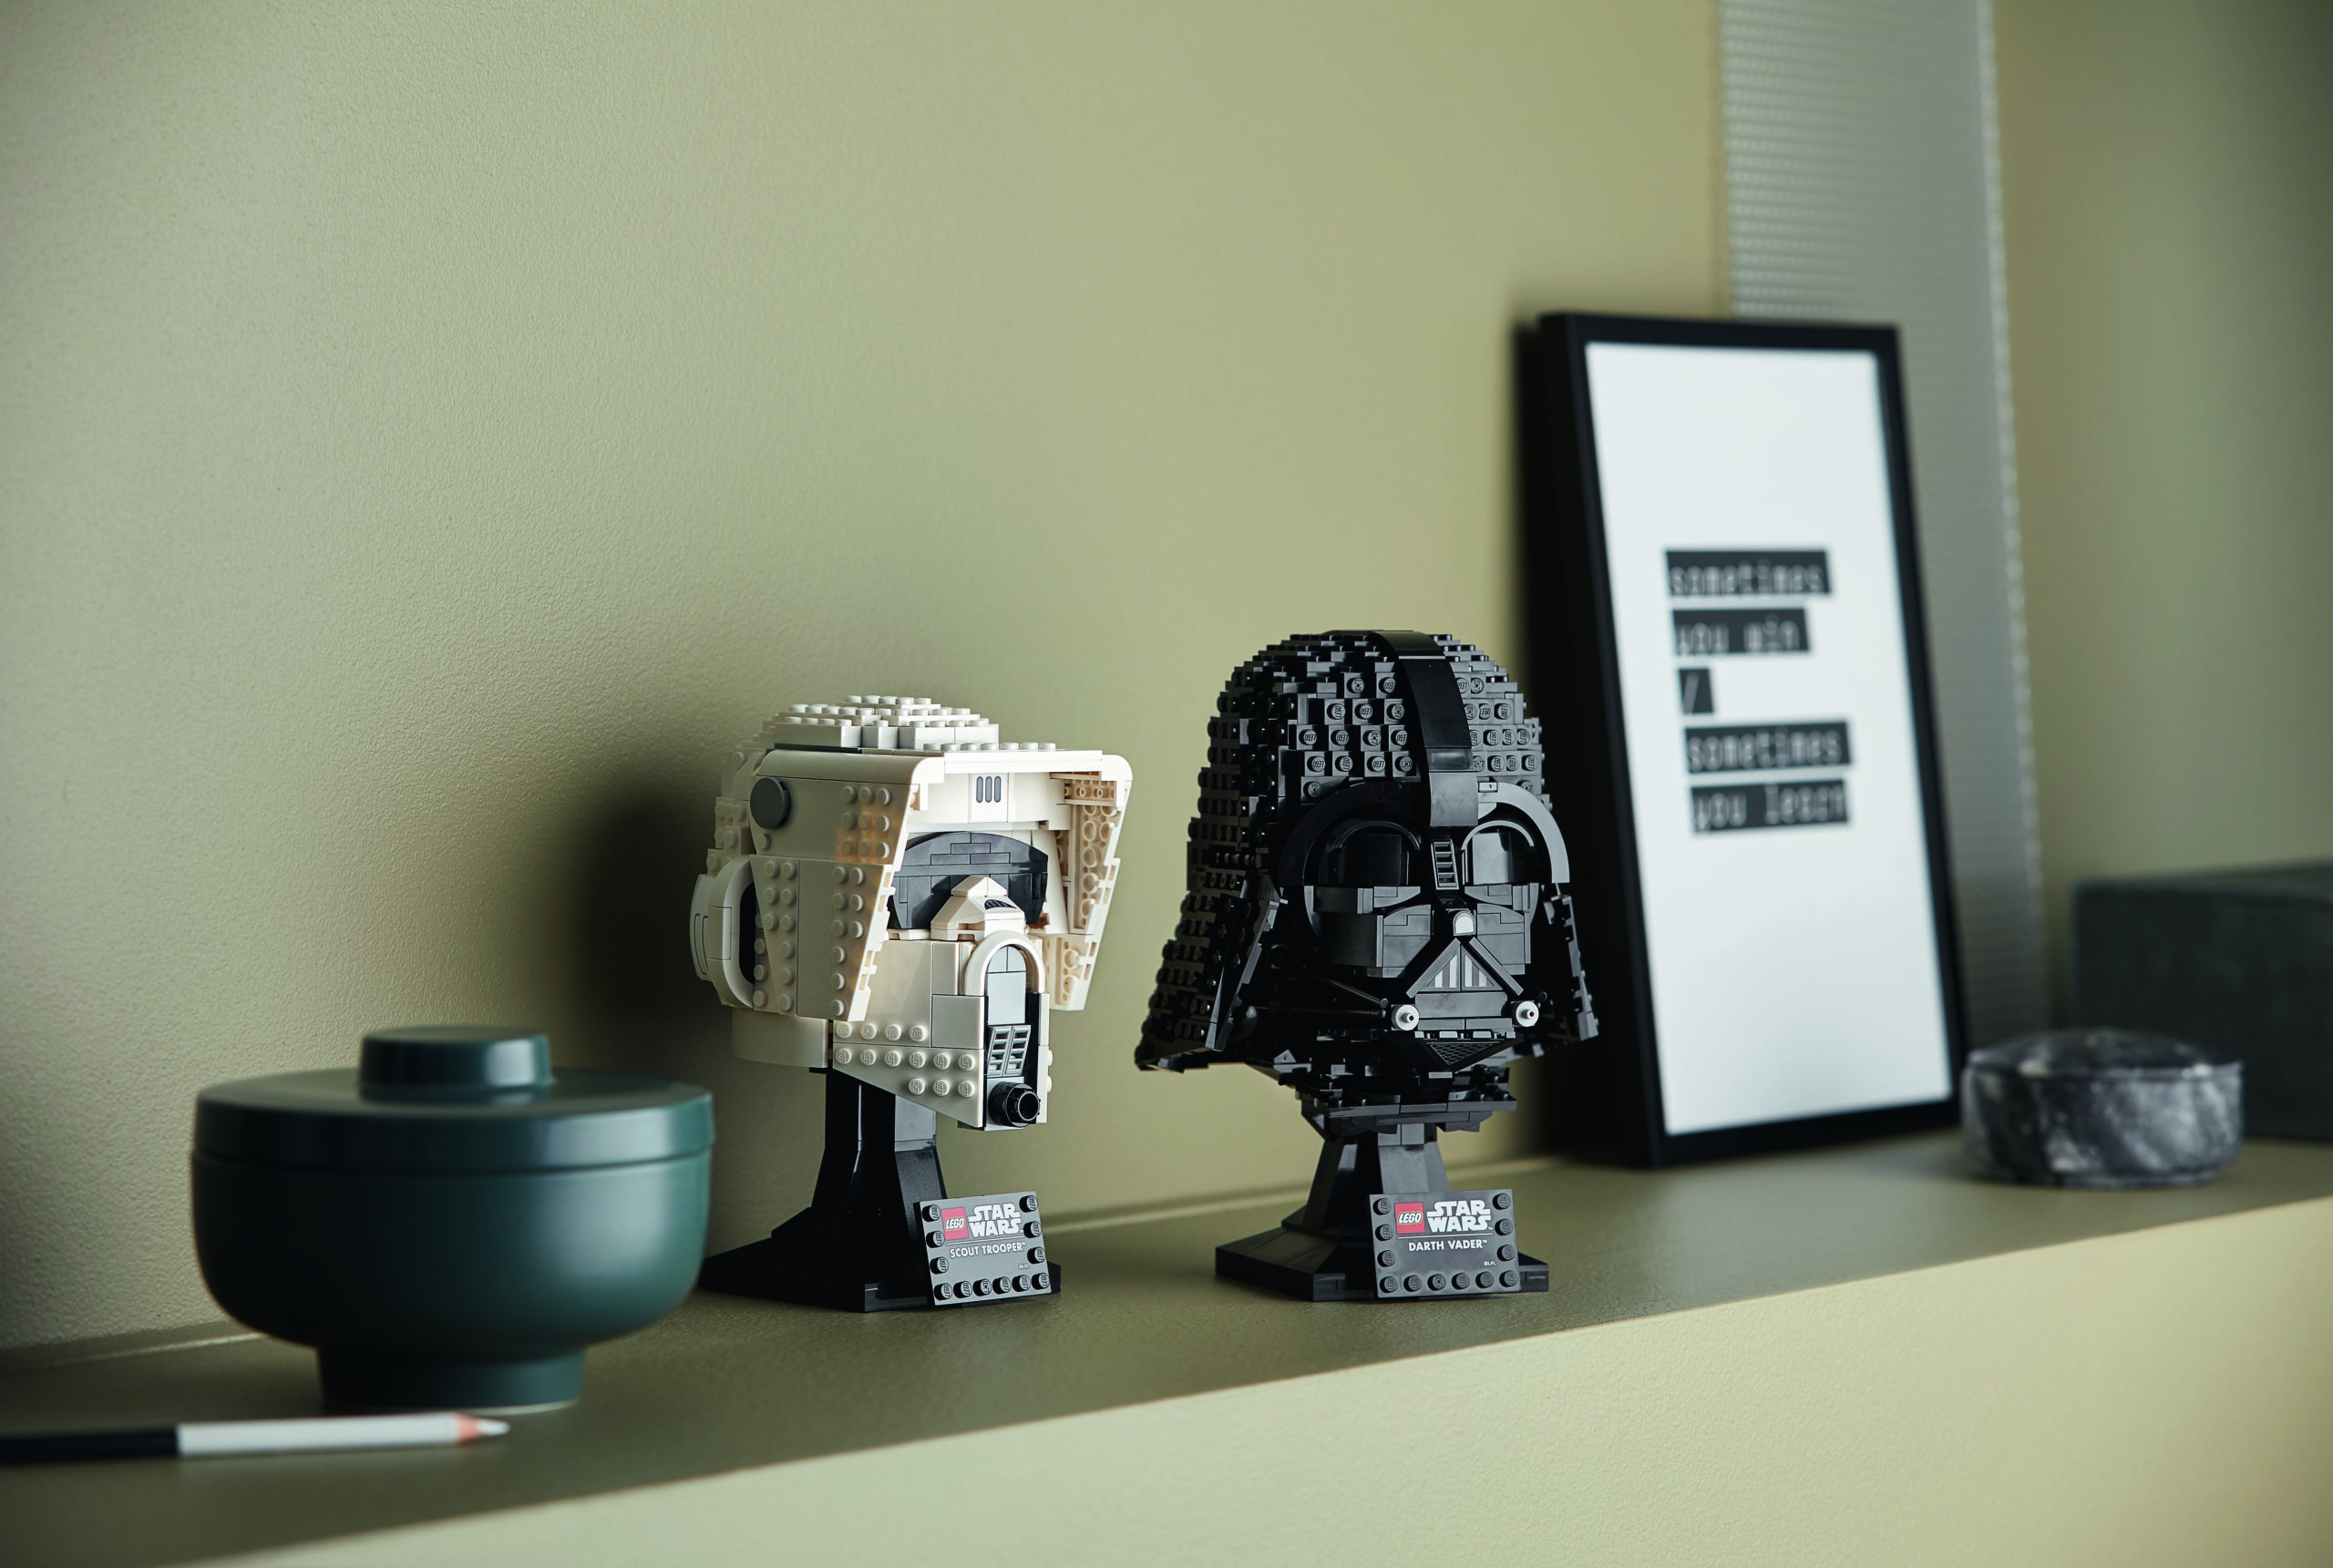 Le casque de Dark Vador - LEGO® Star Wars - 75304 - Jeux de construction